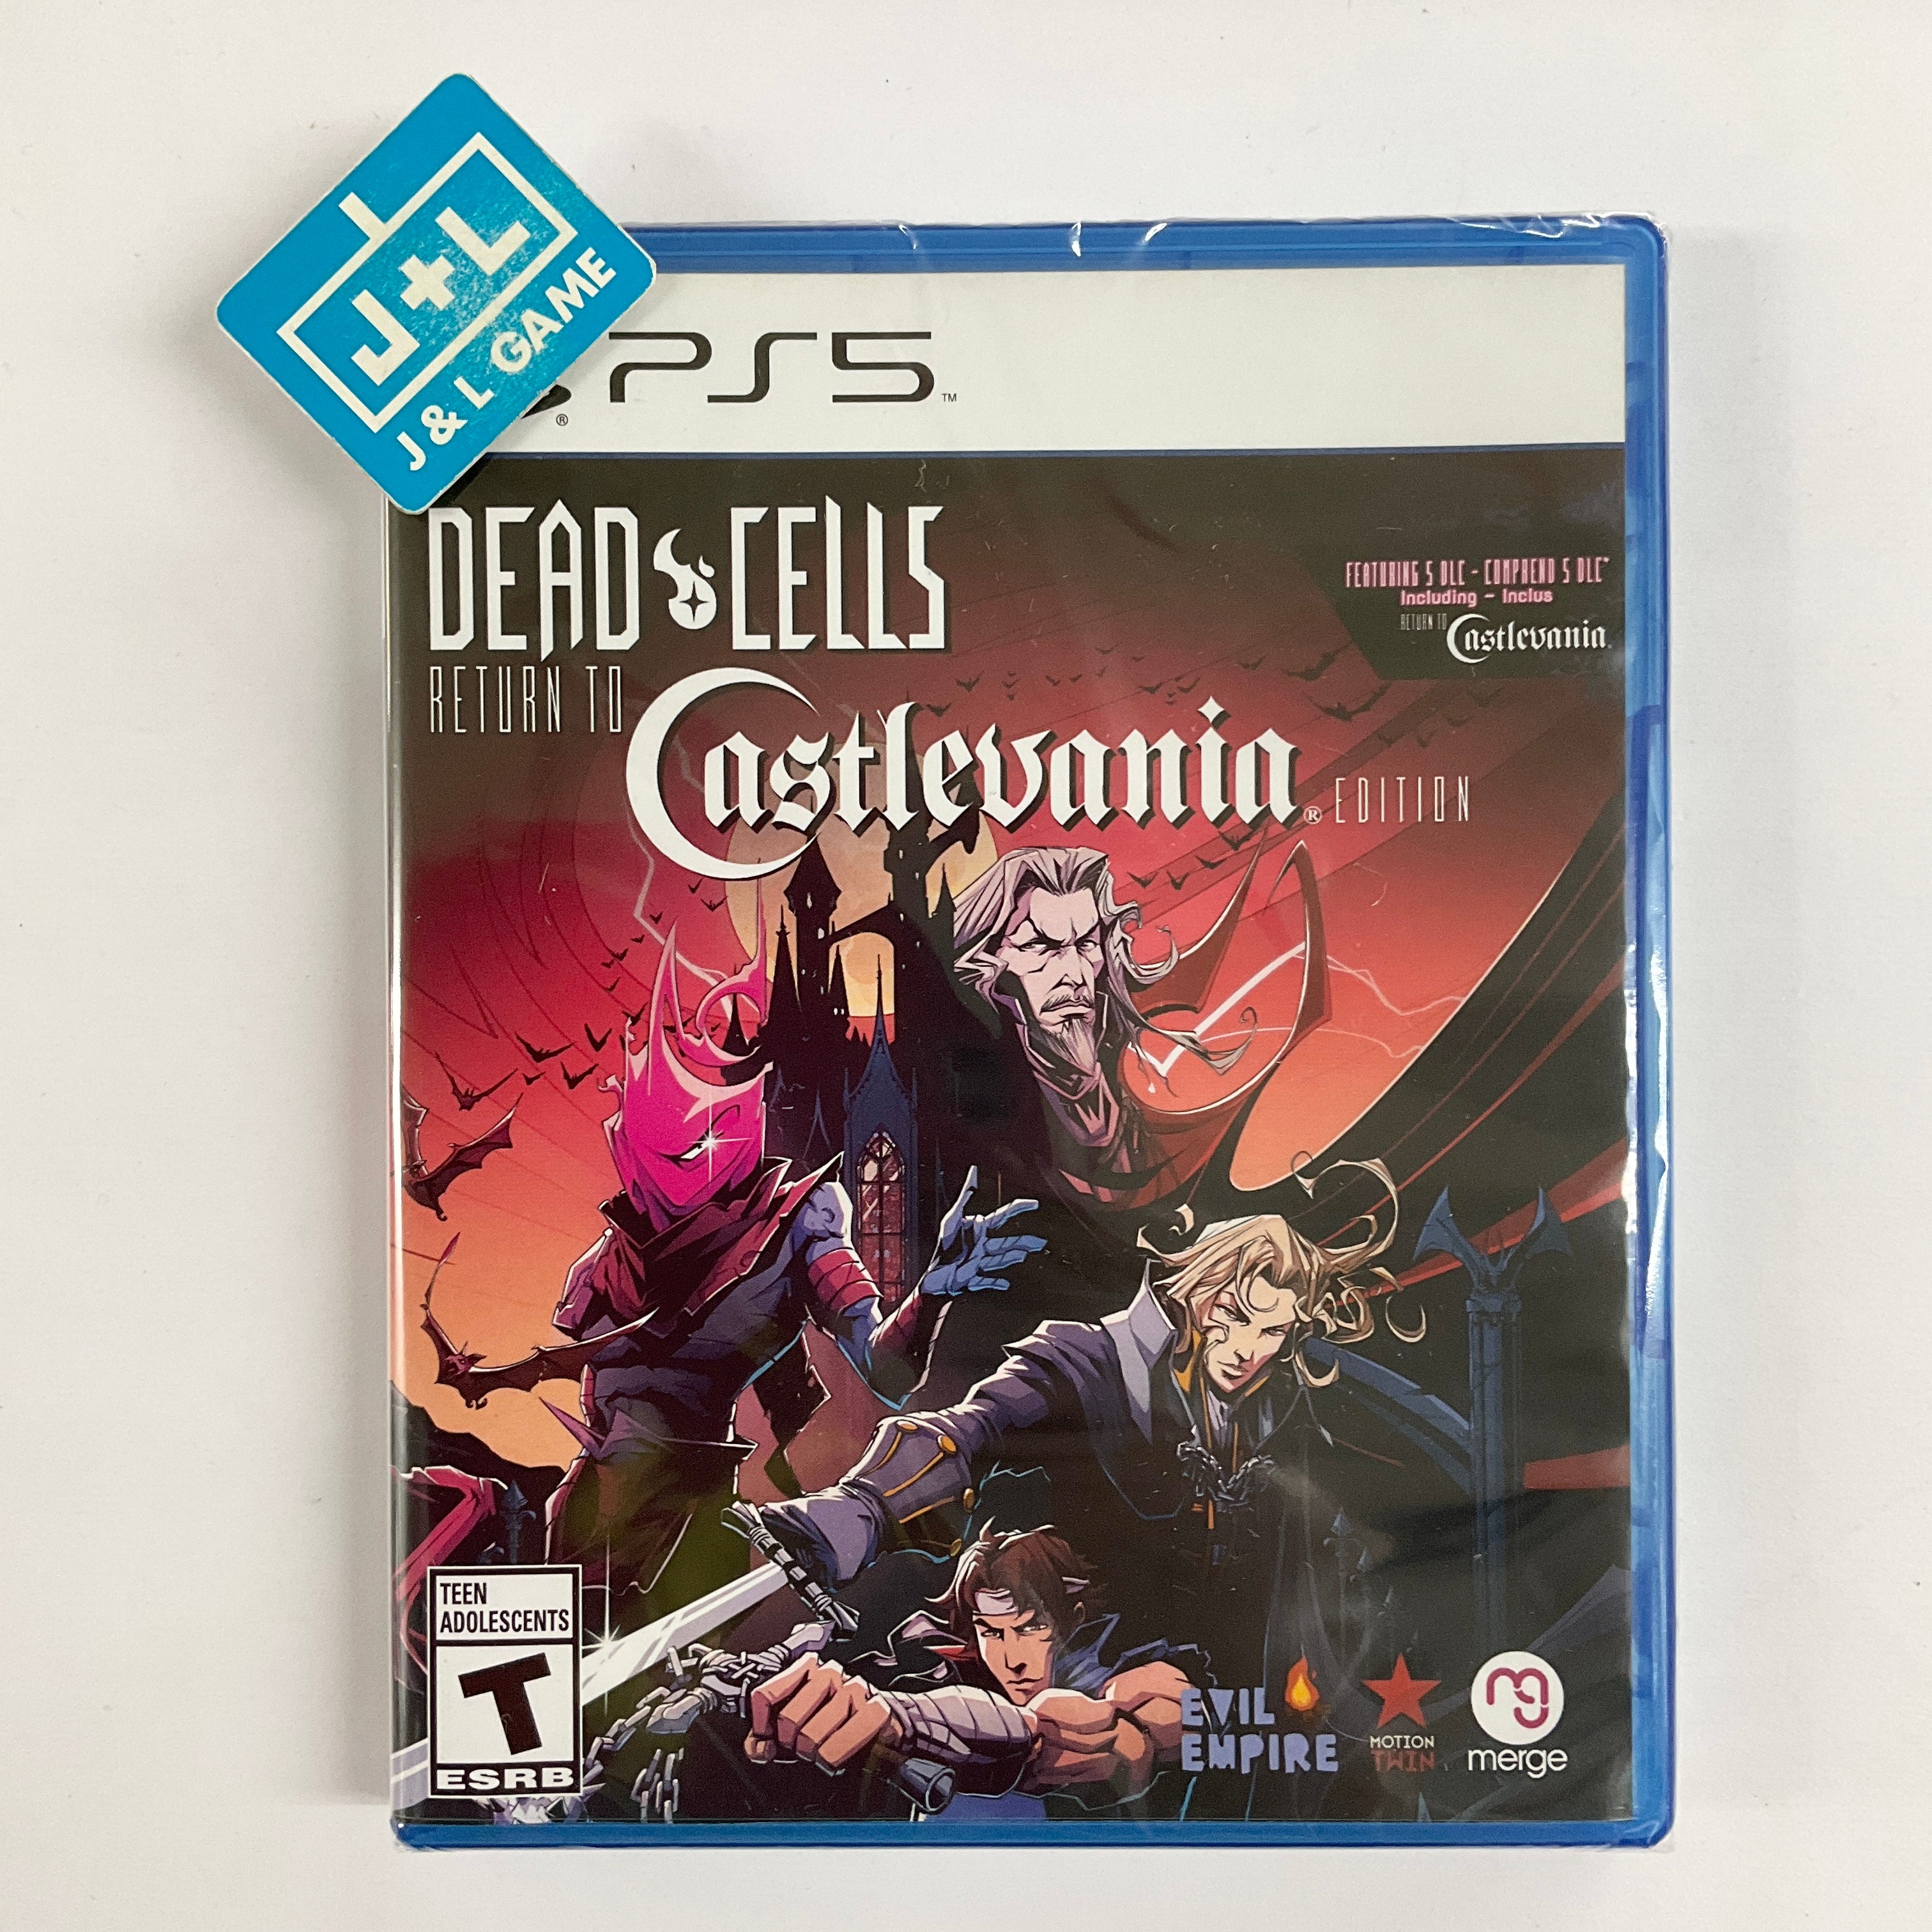 Dead Cells: Return to Castlevania Edition - (PS5) PlayStation 5 